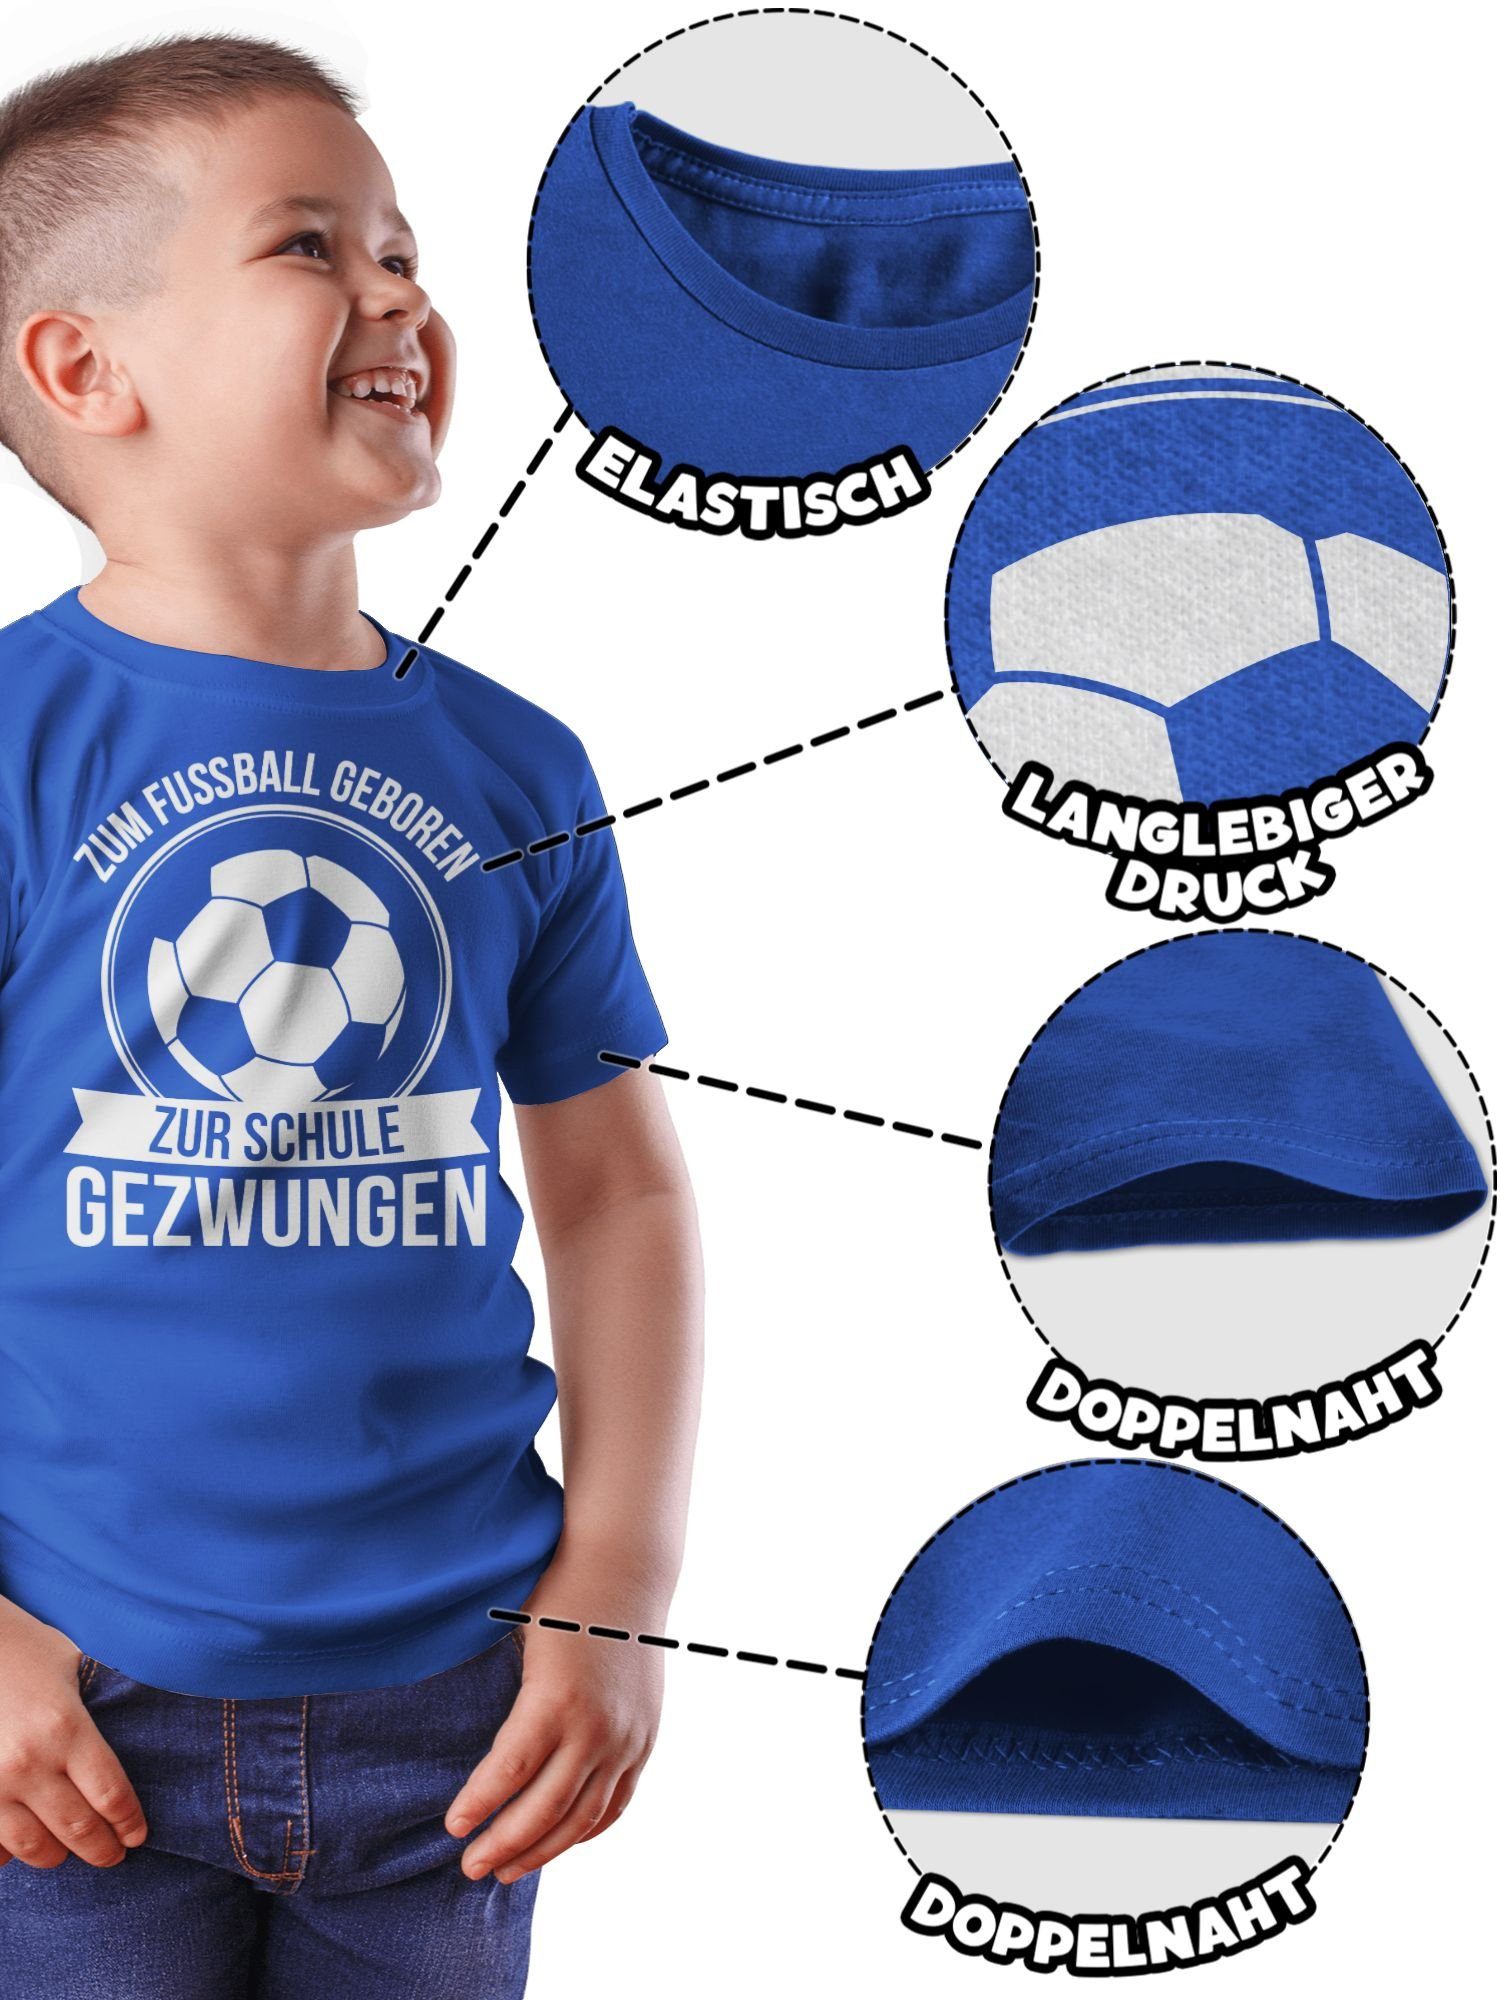 geboren Schulanfang gezwungen 03 T-Shirt Fußball Royalblau Schule Shirtracer Einschulung Junge zur Zum Geschenke